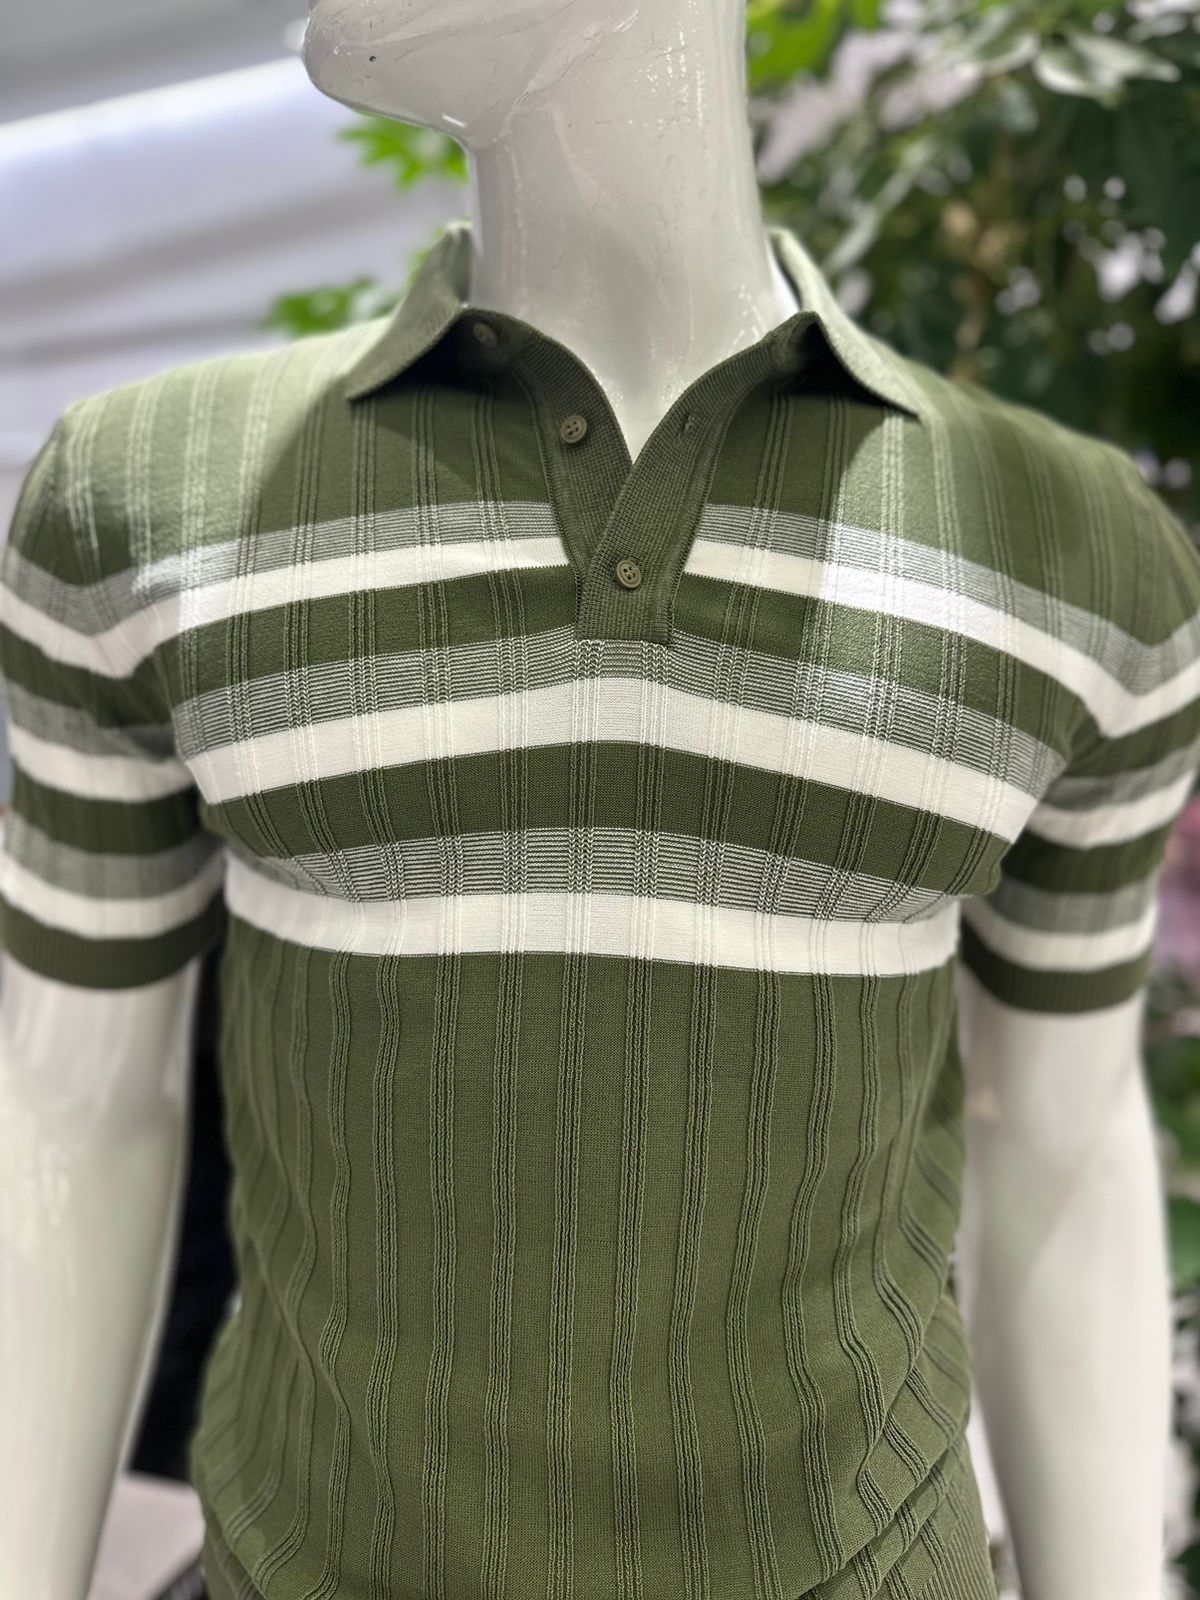 Striped Design Casual Men's Knit T-Shirt